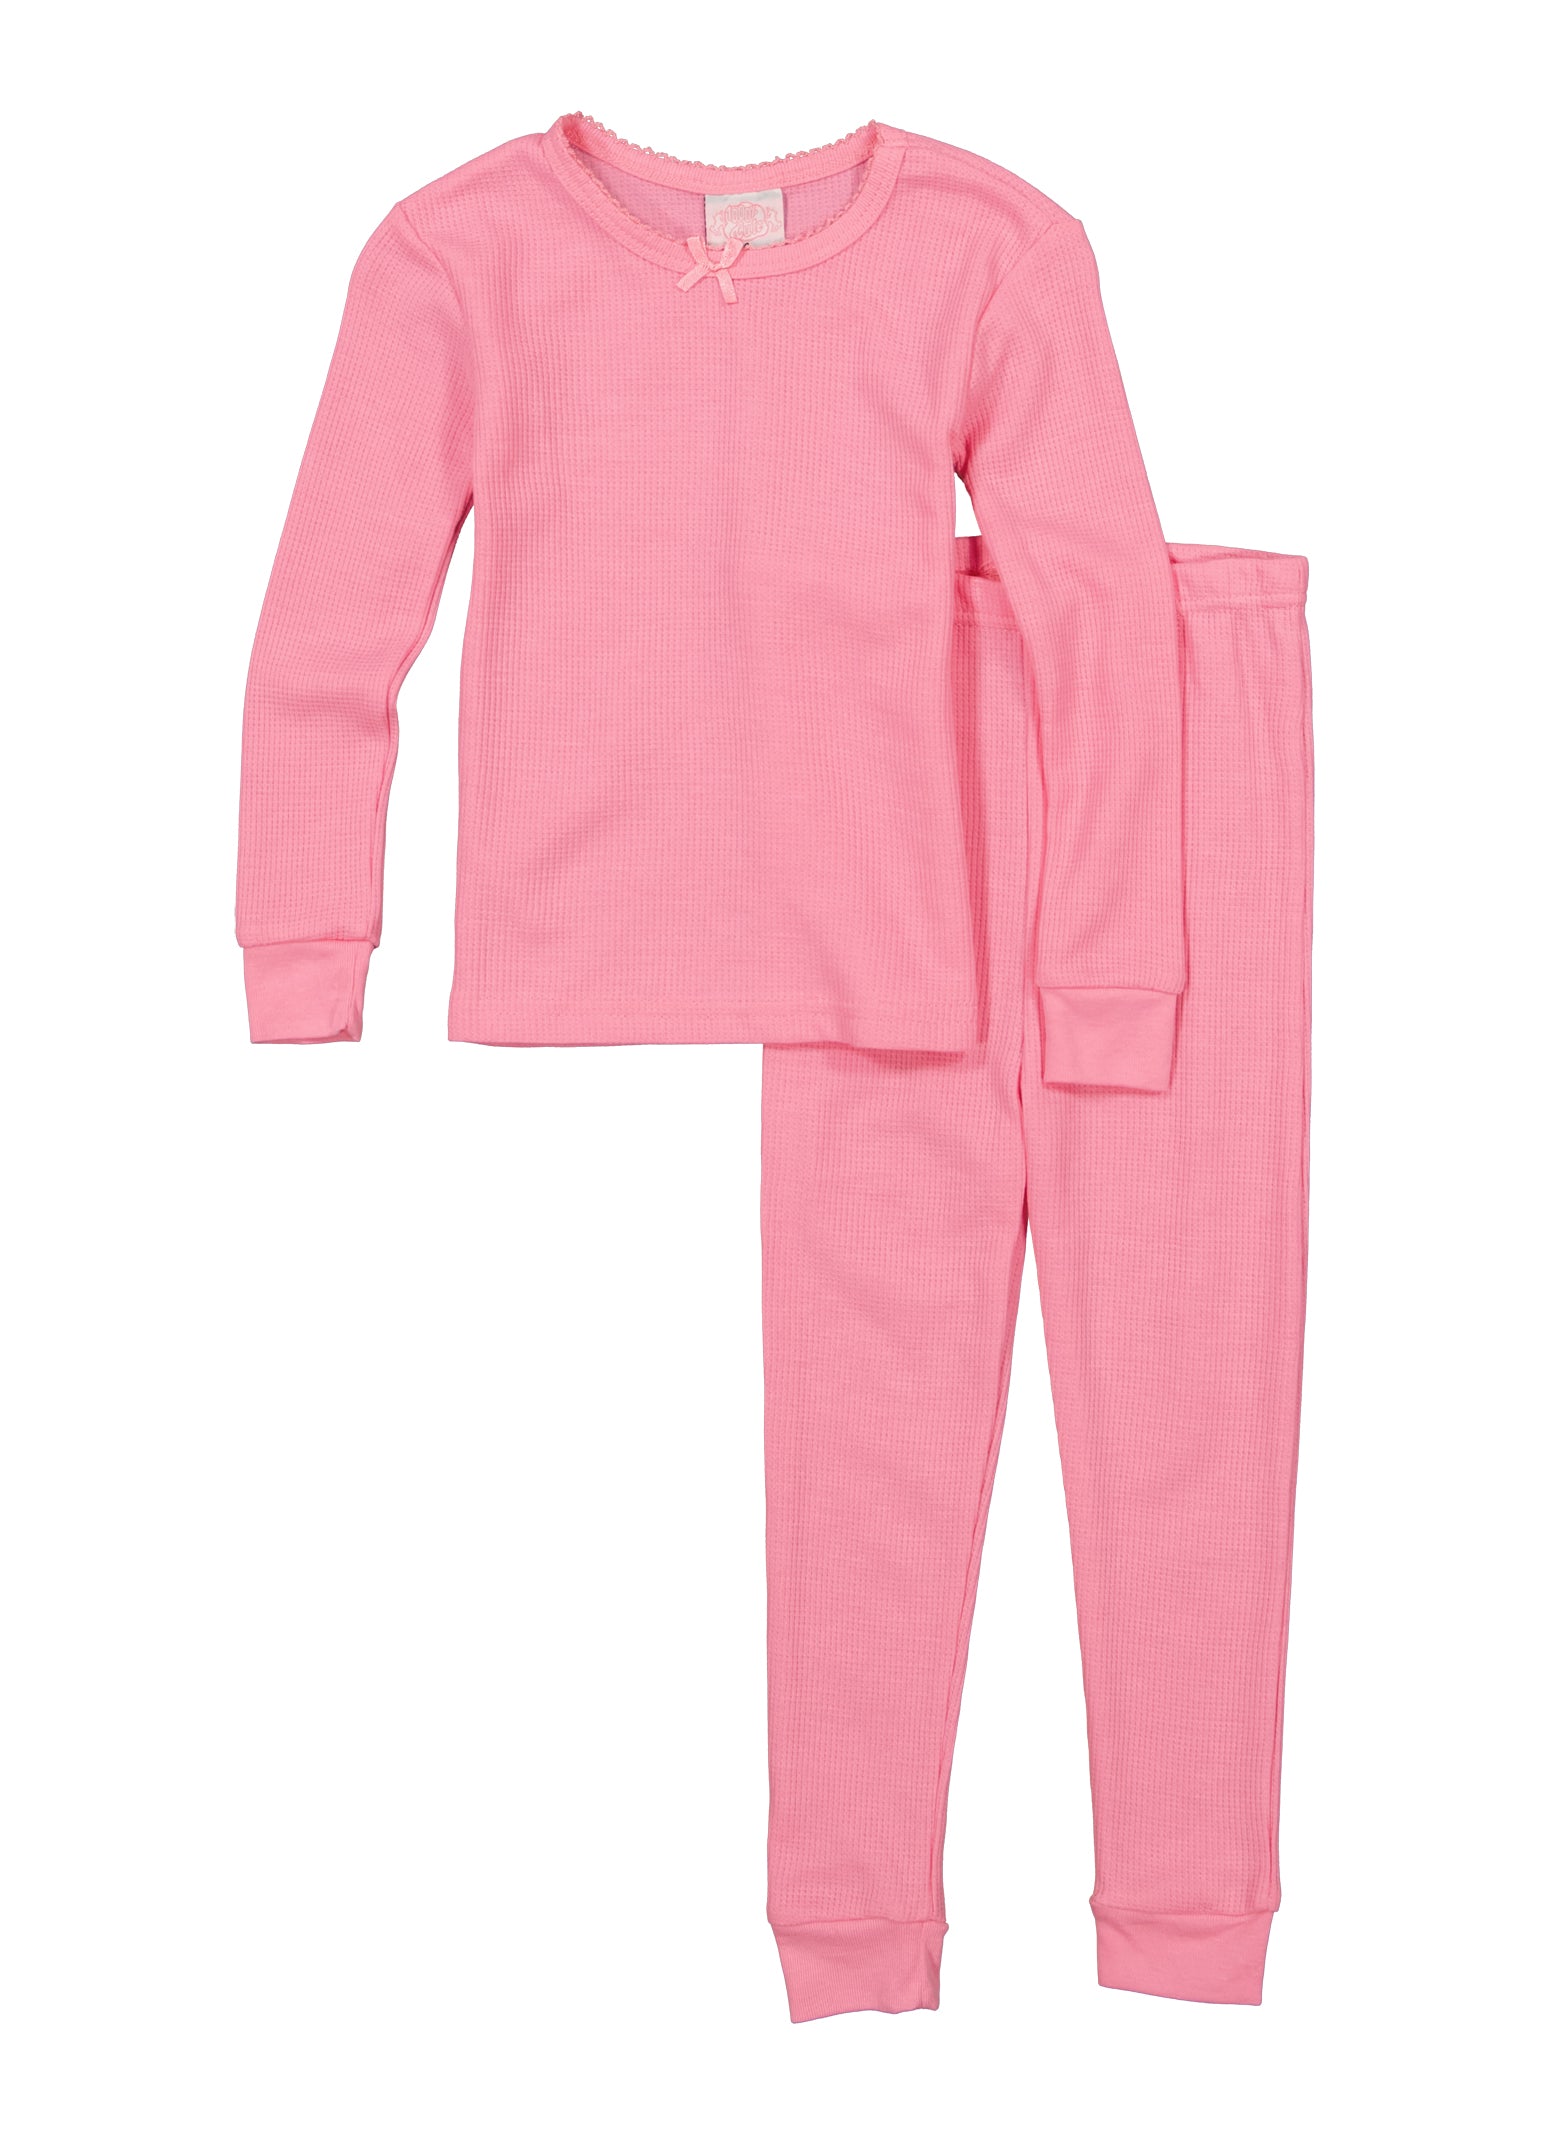 Girls Thermal Pajama Top and Pants - Pink